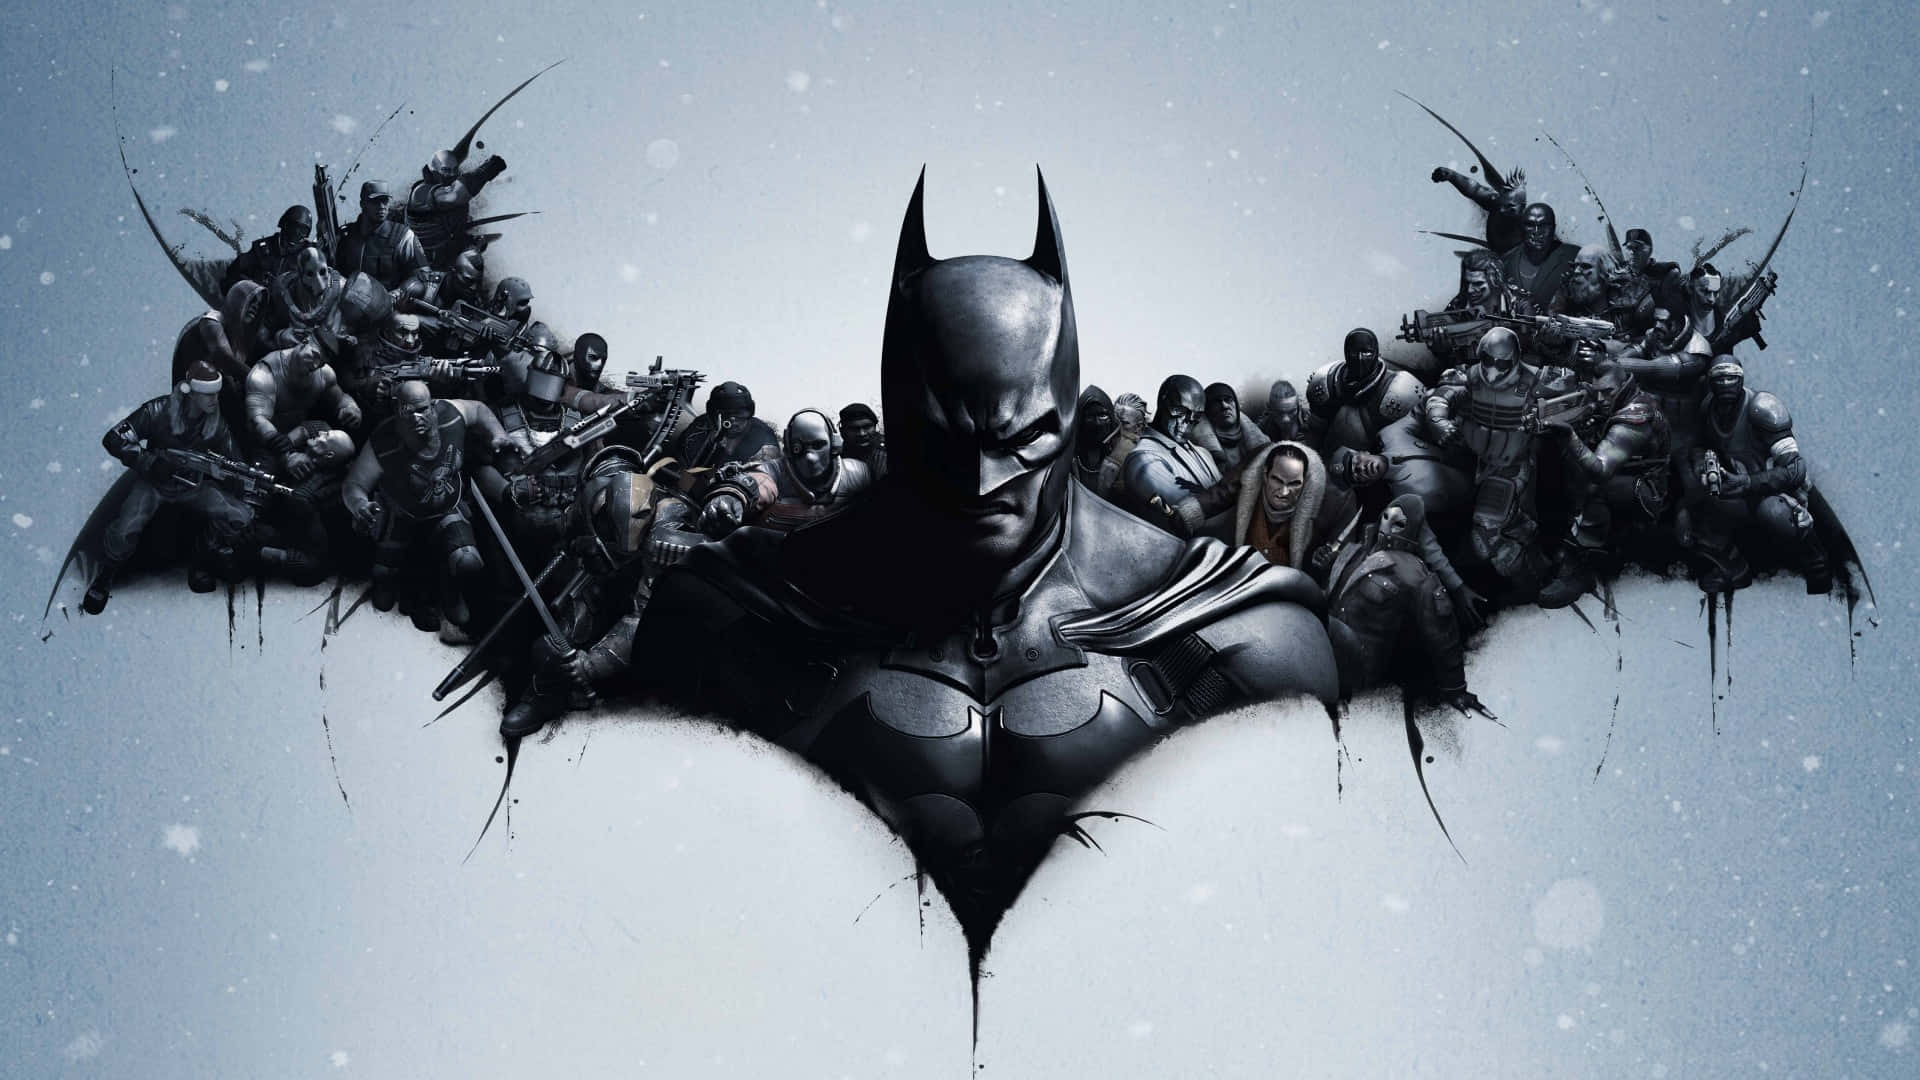 Dark Knight Bat Signal Battle Artwork Wallpaper